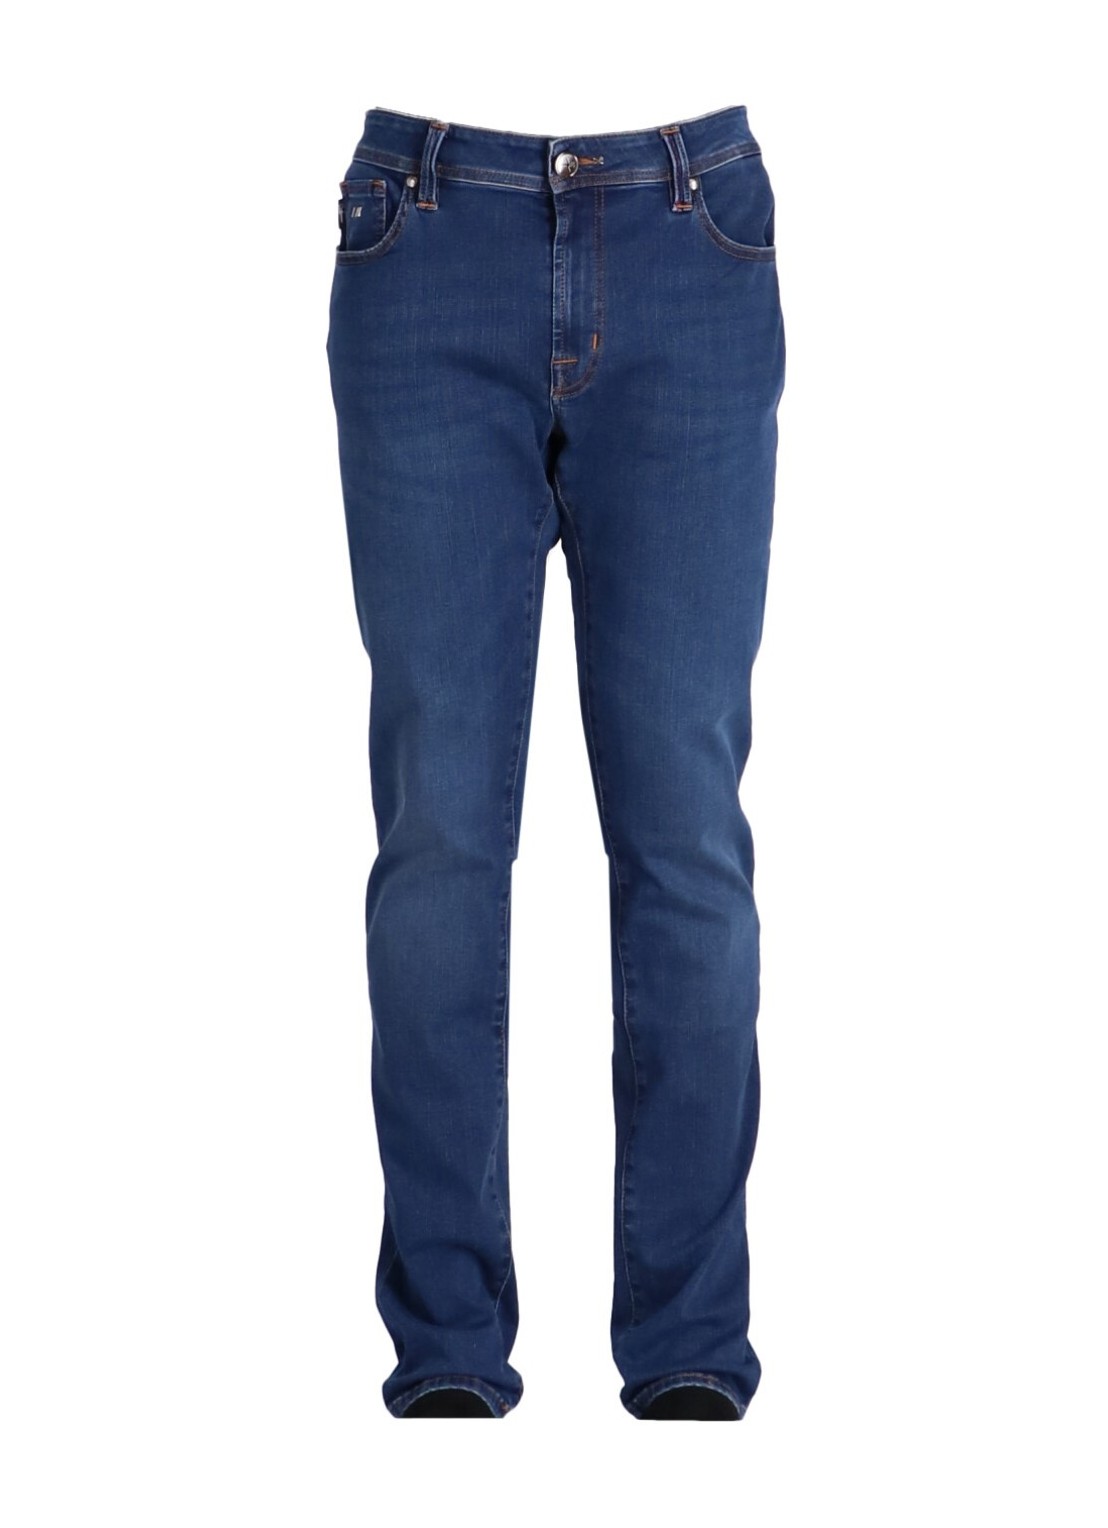 Pantalon jeans tramarossa denim man leonardo zip stre leonardo zip stre 6 months talla 32
 